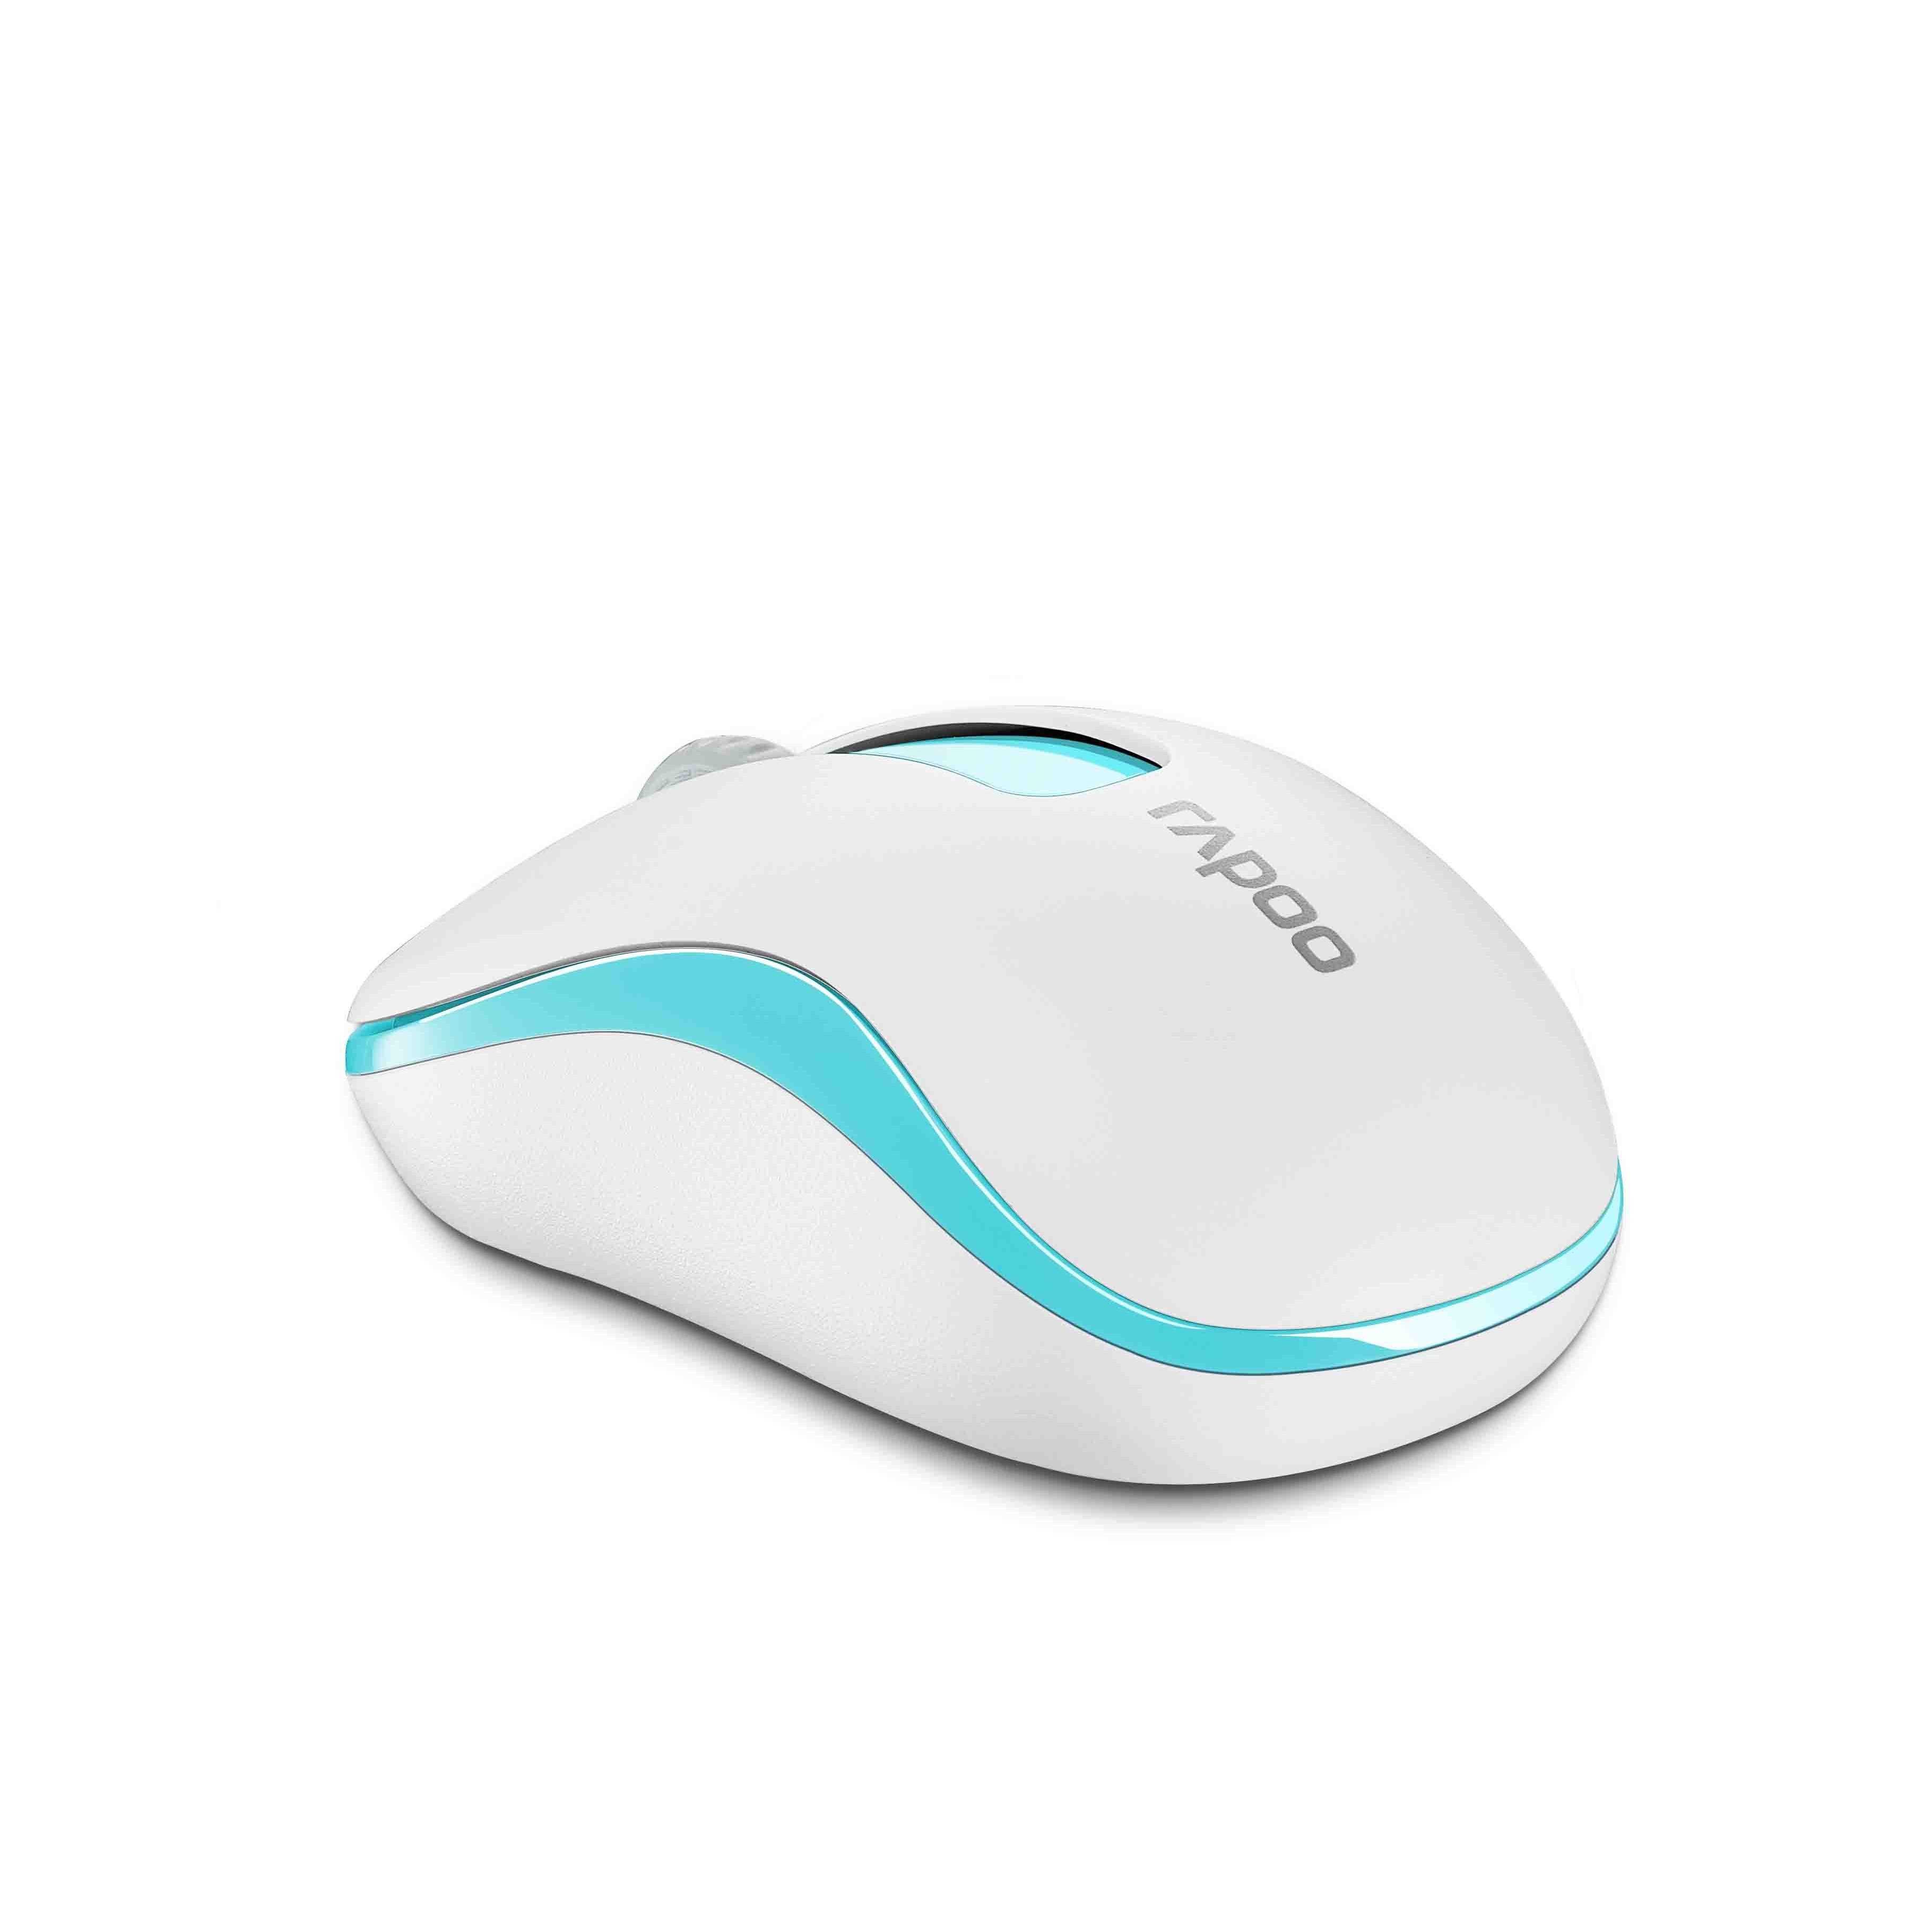 Rapoo wireless optical mouse 1070p blue usb в городе ростов-на-дону